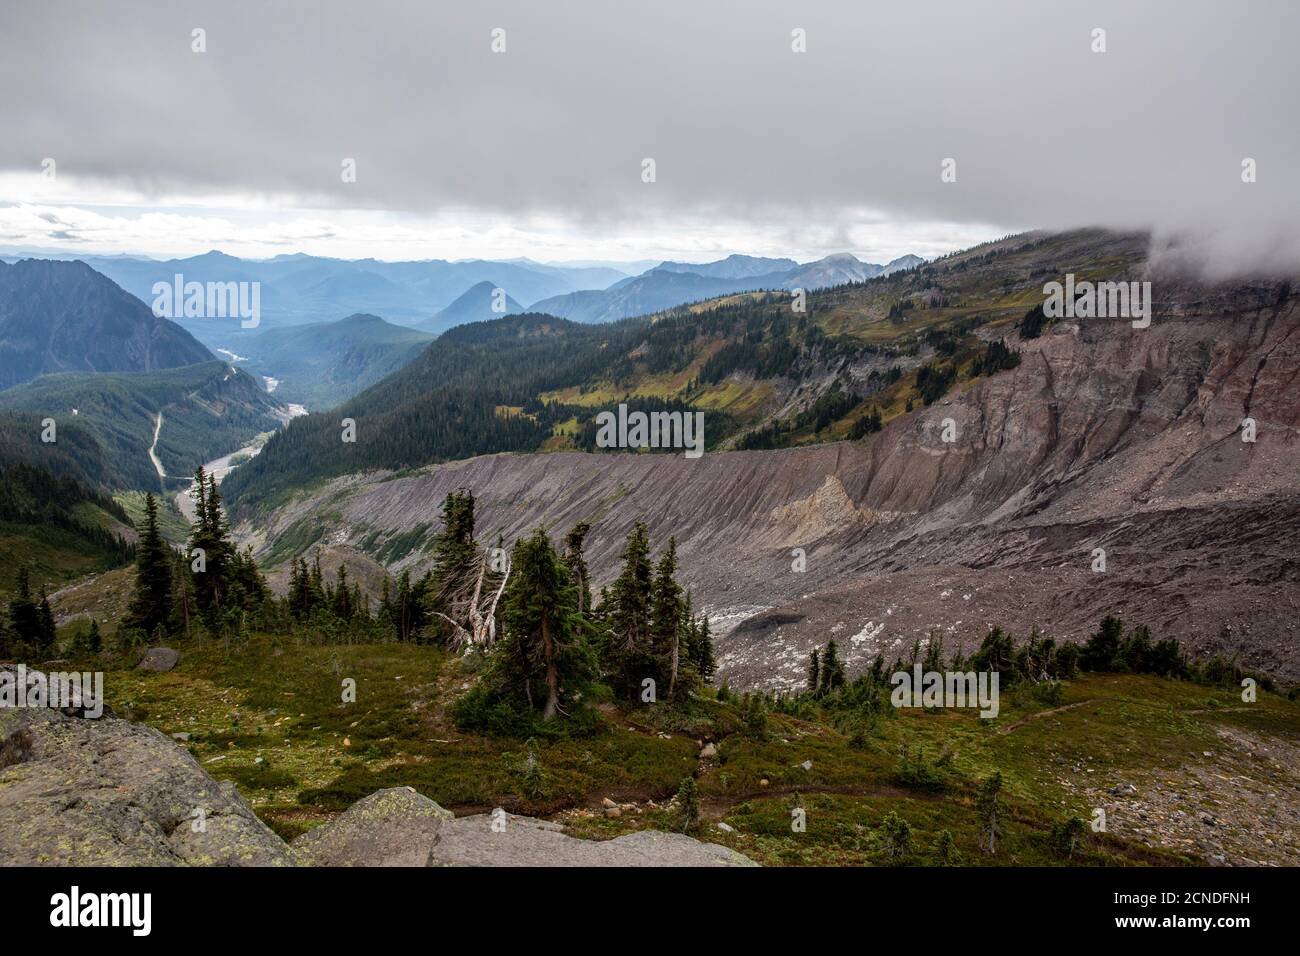 View of the Deadhorse Creek Trail, Mount Rainier National Park, Washington State, United States of America Stock Photo